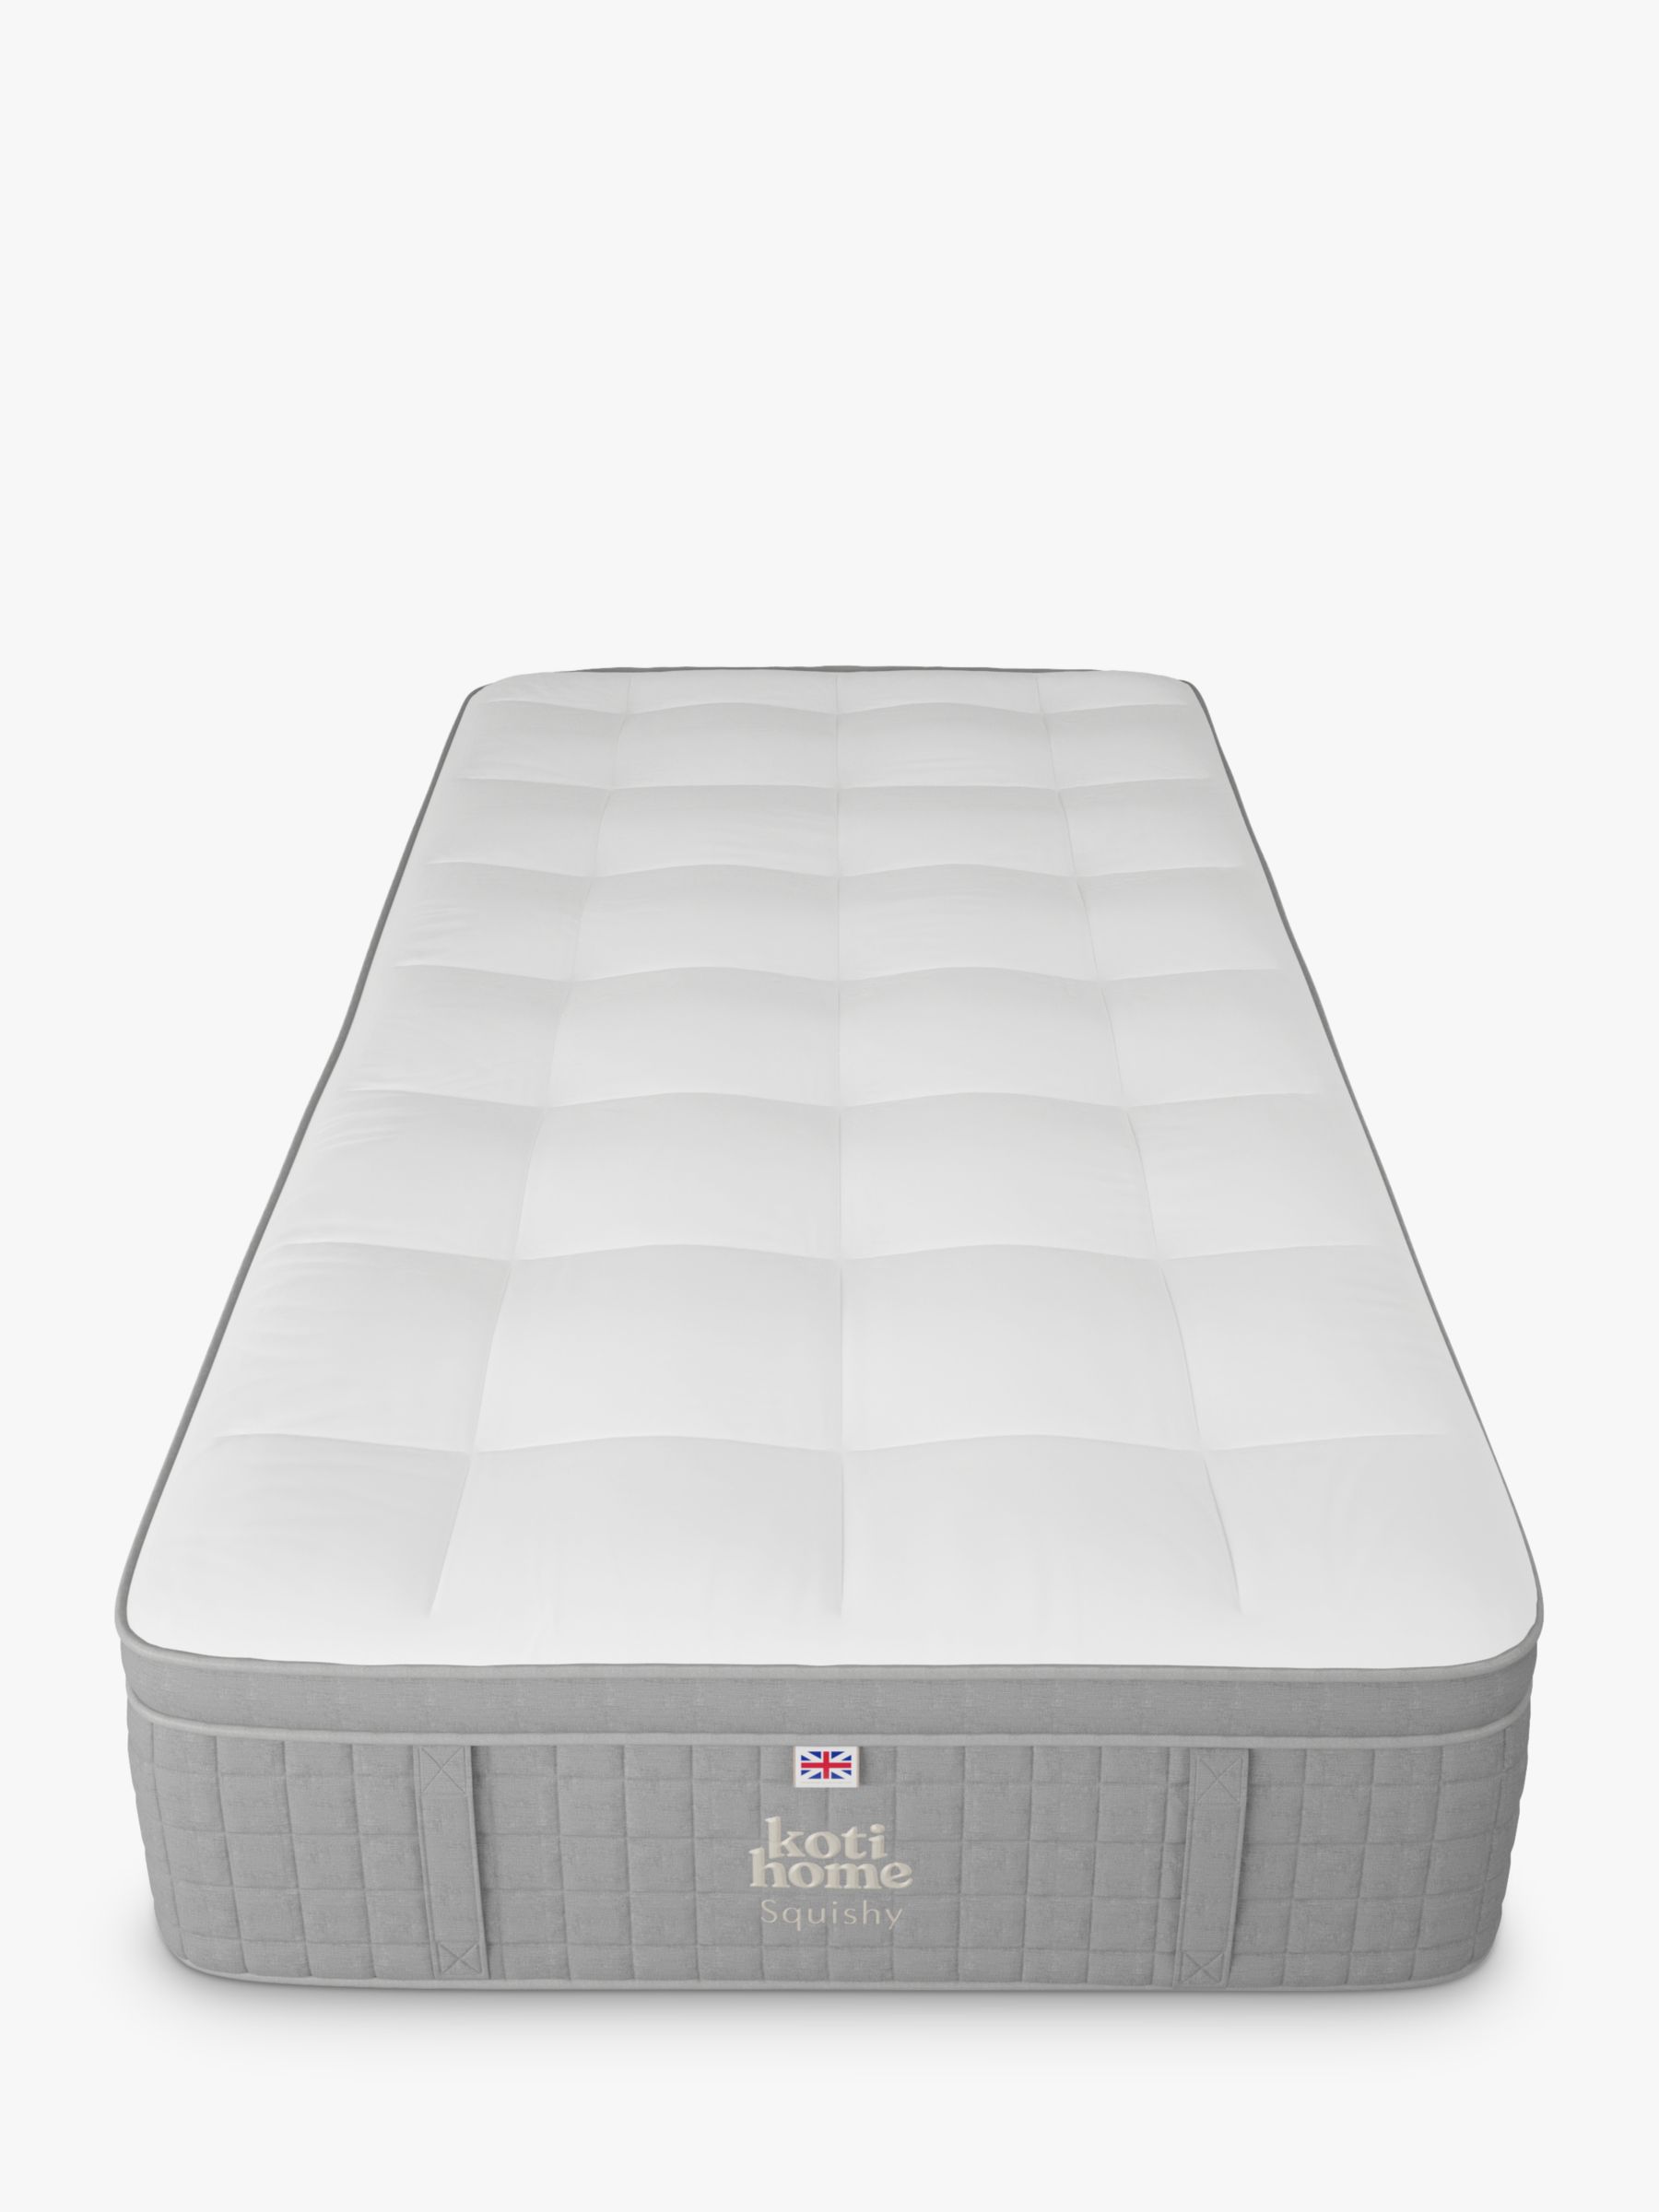 Photo of Koti home squishy pocket spring mattress medium support single